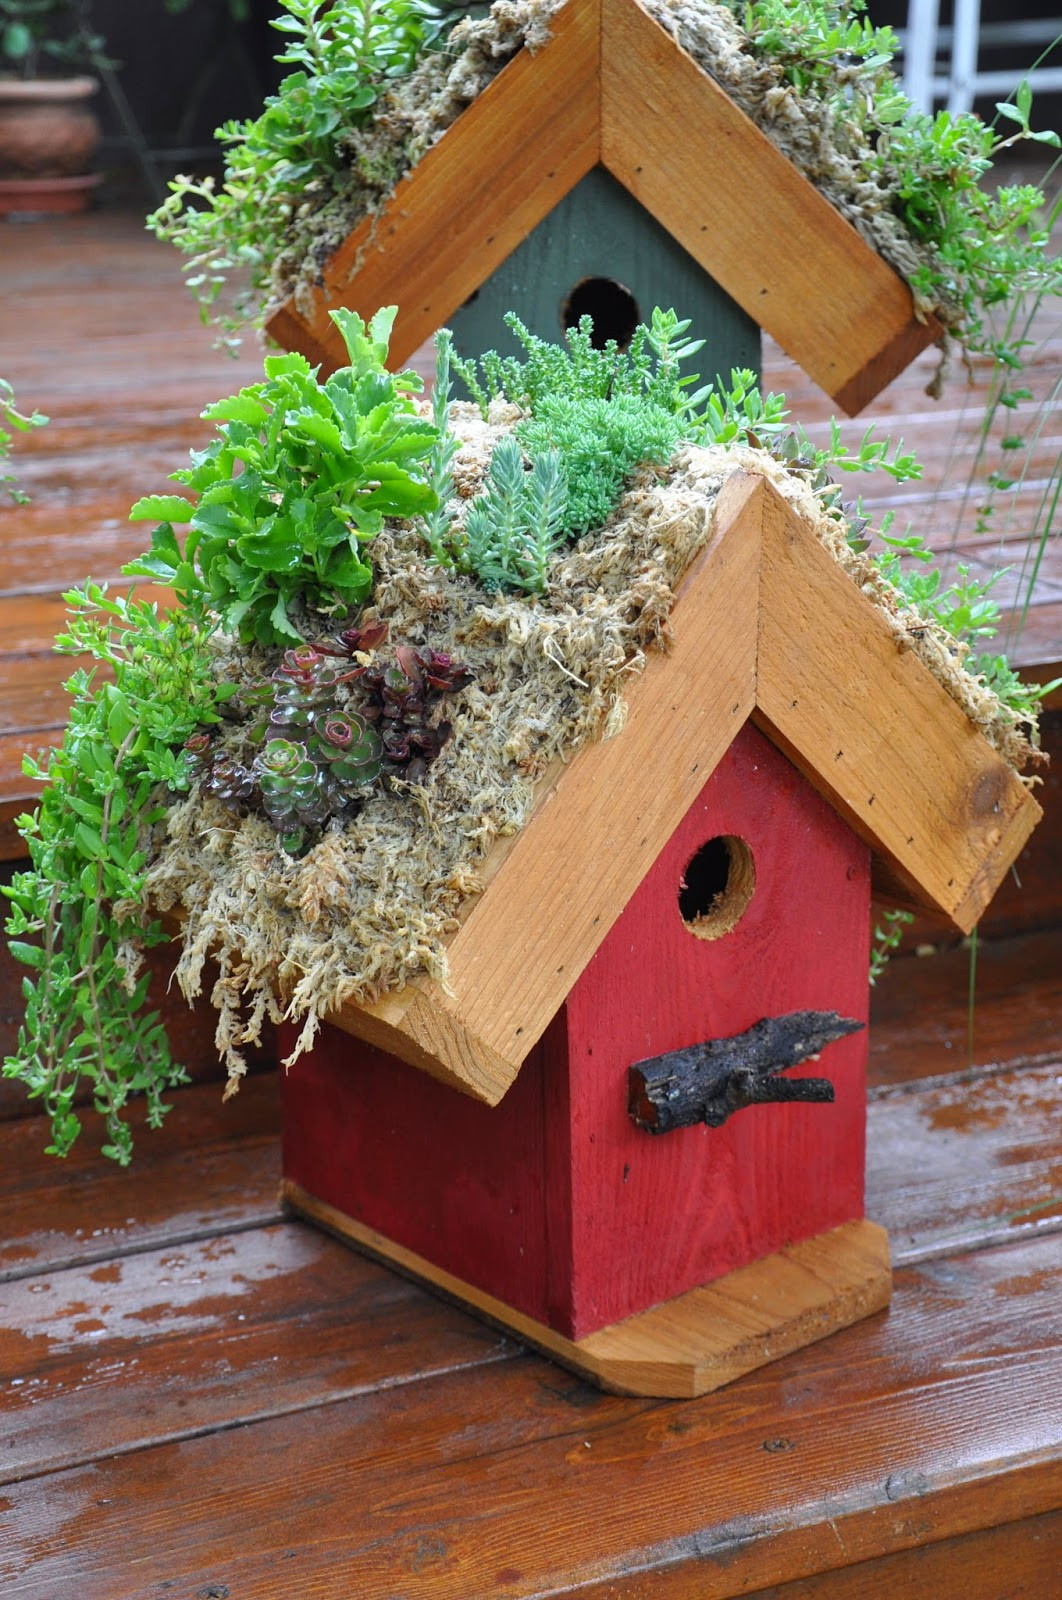 Best ideas about DIY Bird House
. Save or Pin Rebecca s Bird Gardens Blog DIY Living Roof Birdhouse Now.